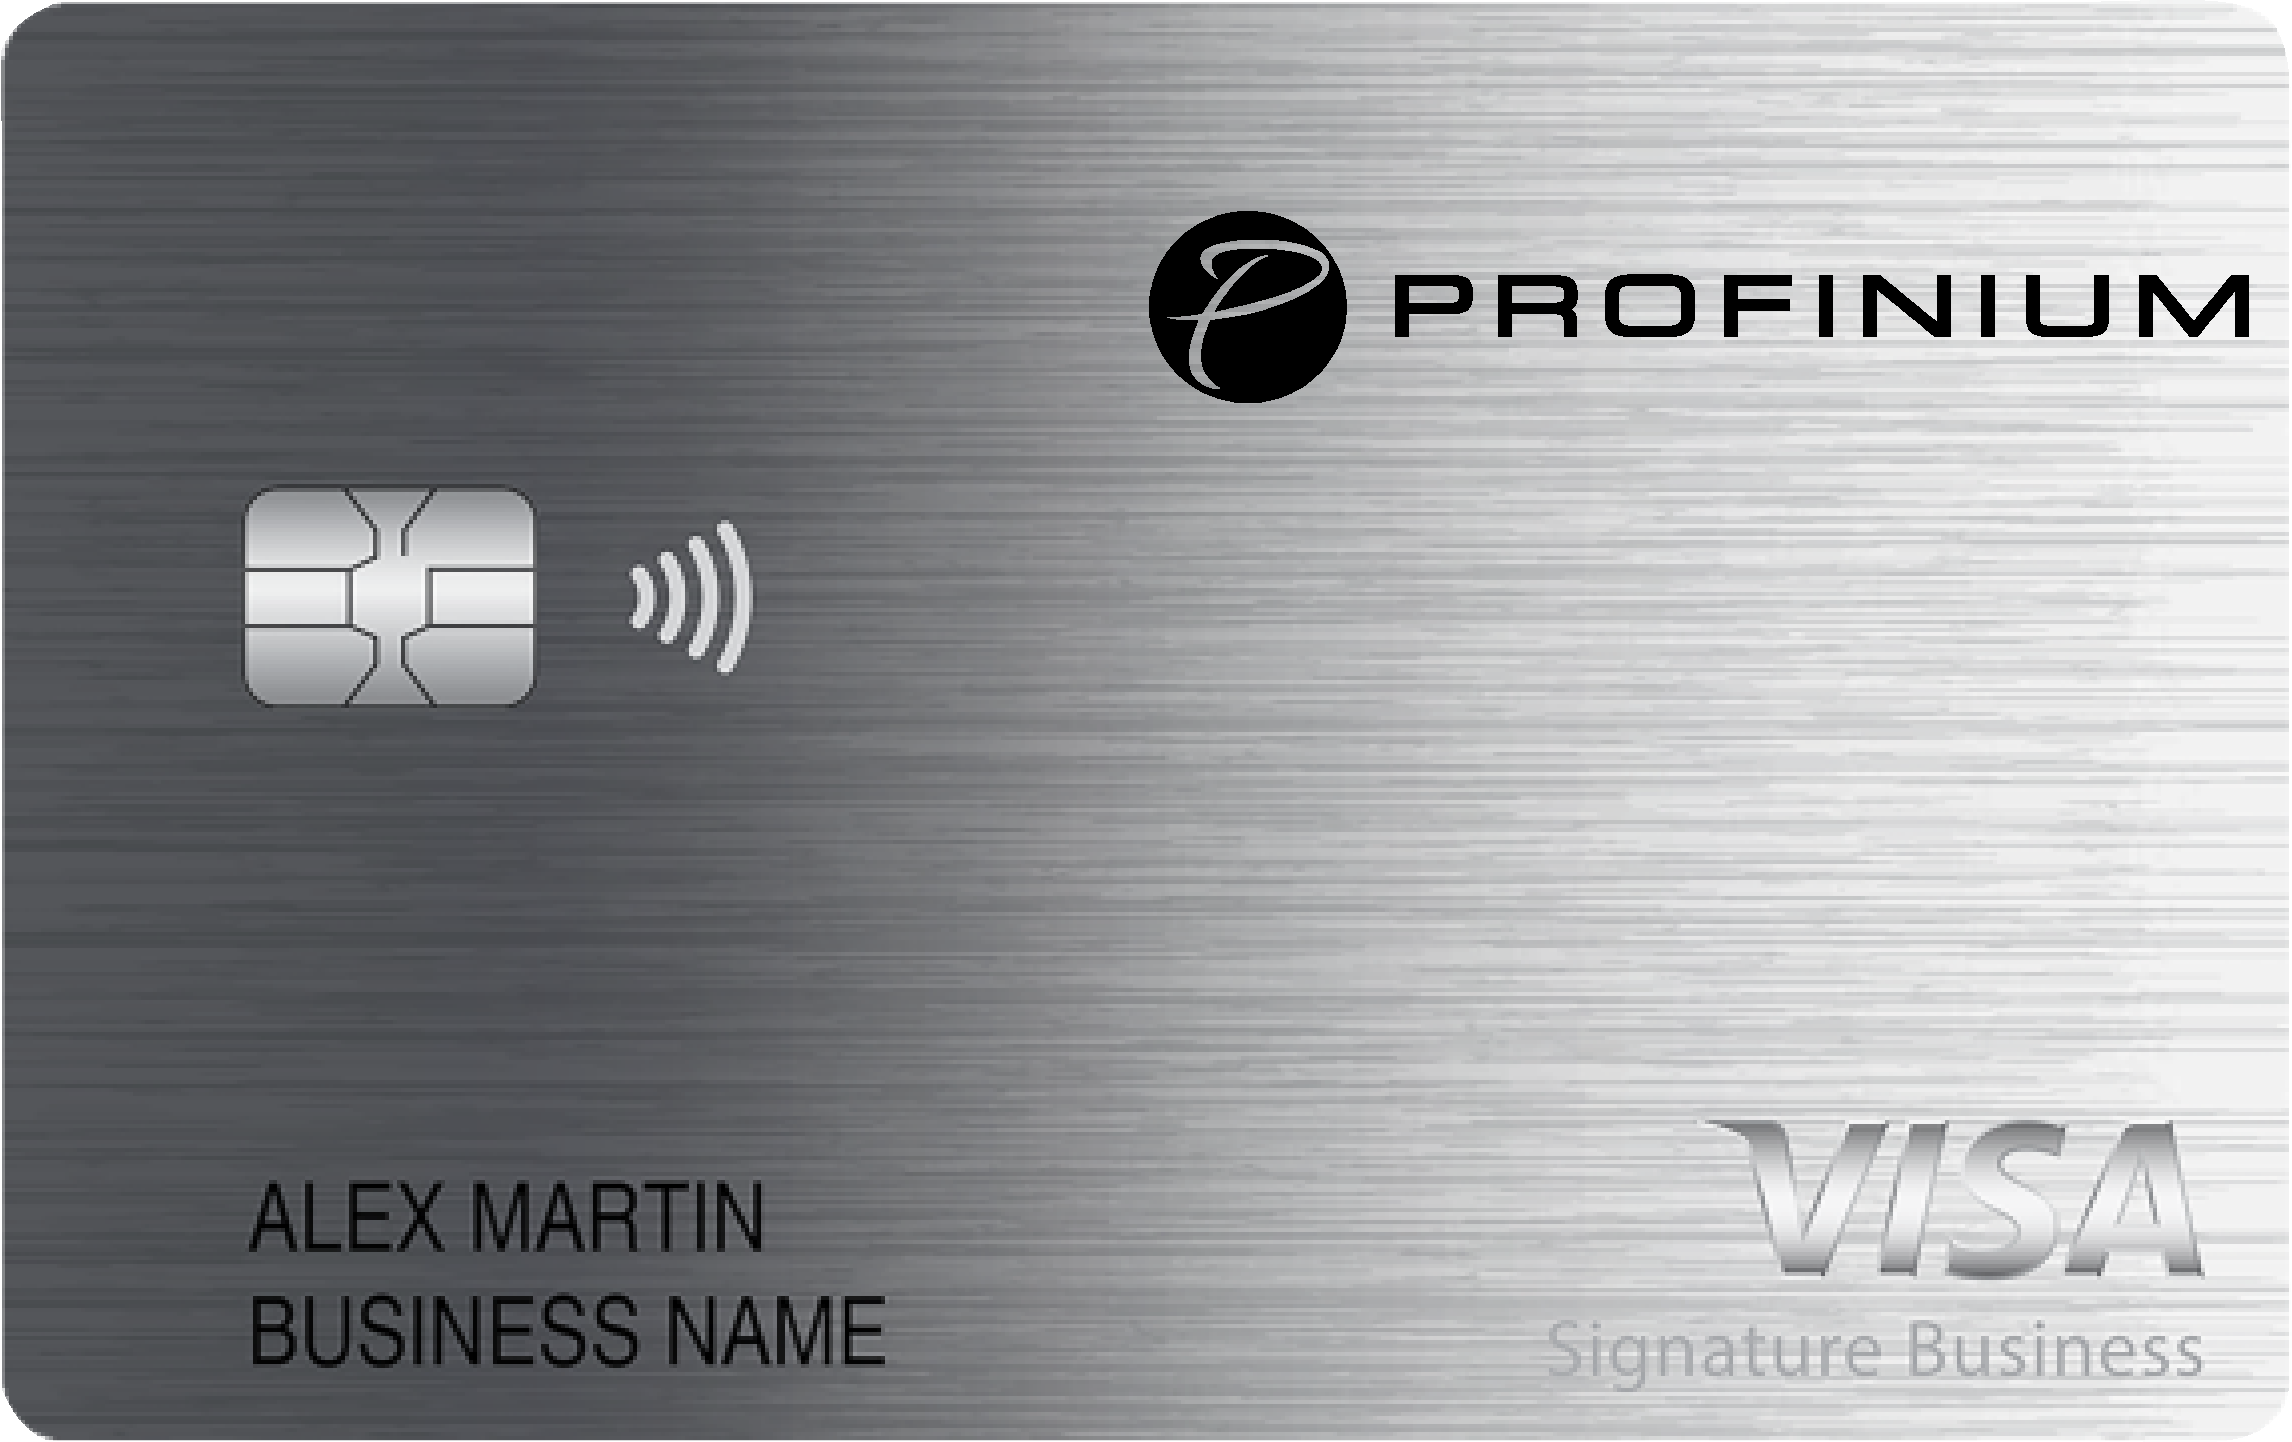 Profinium, Inc Smart Business Rewards Card